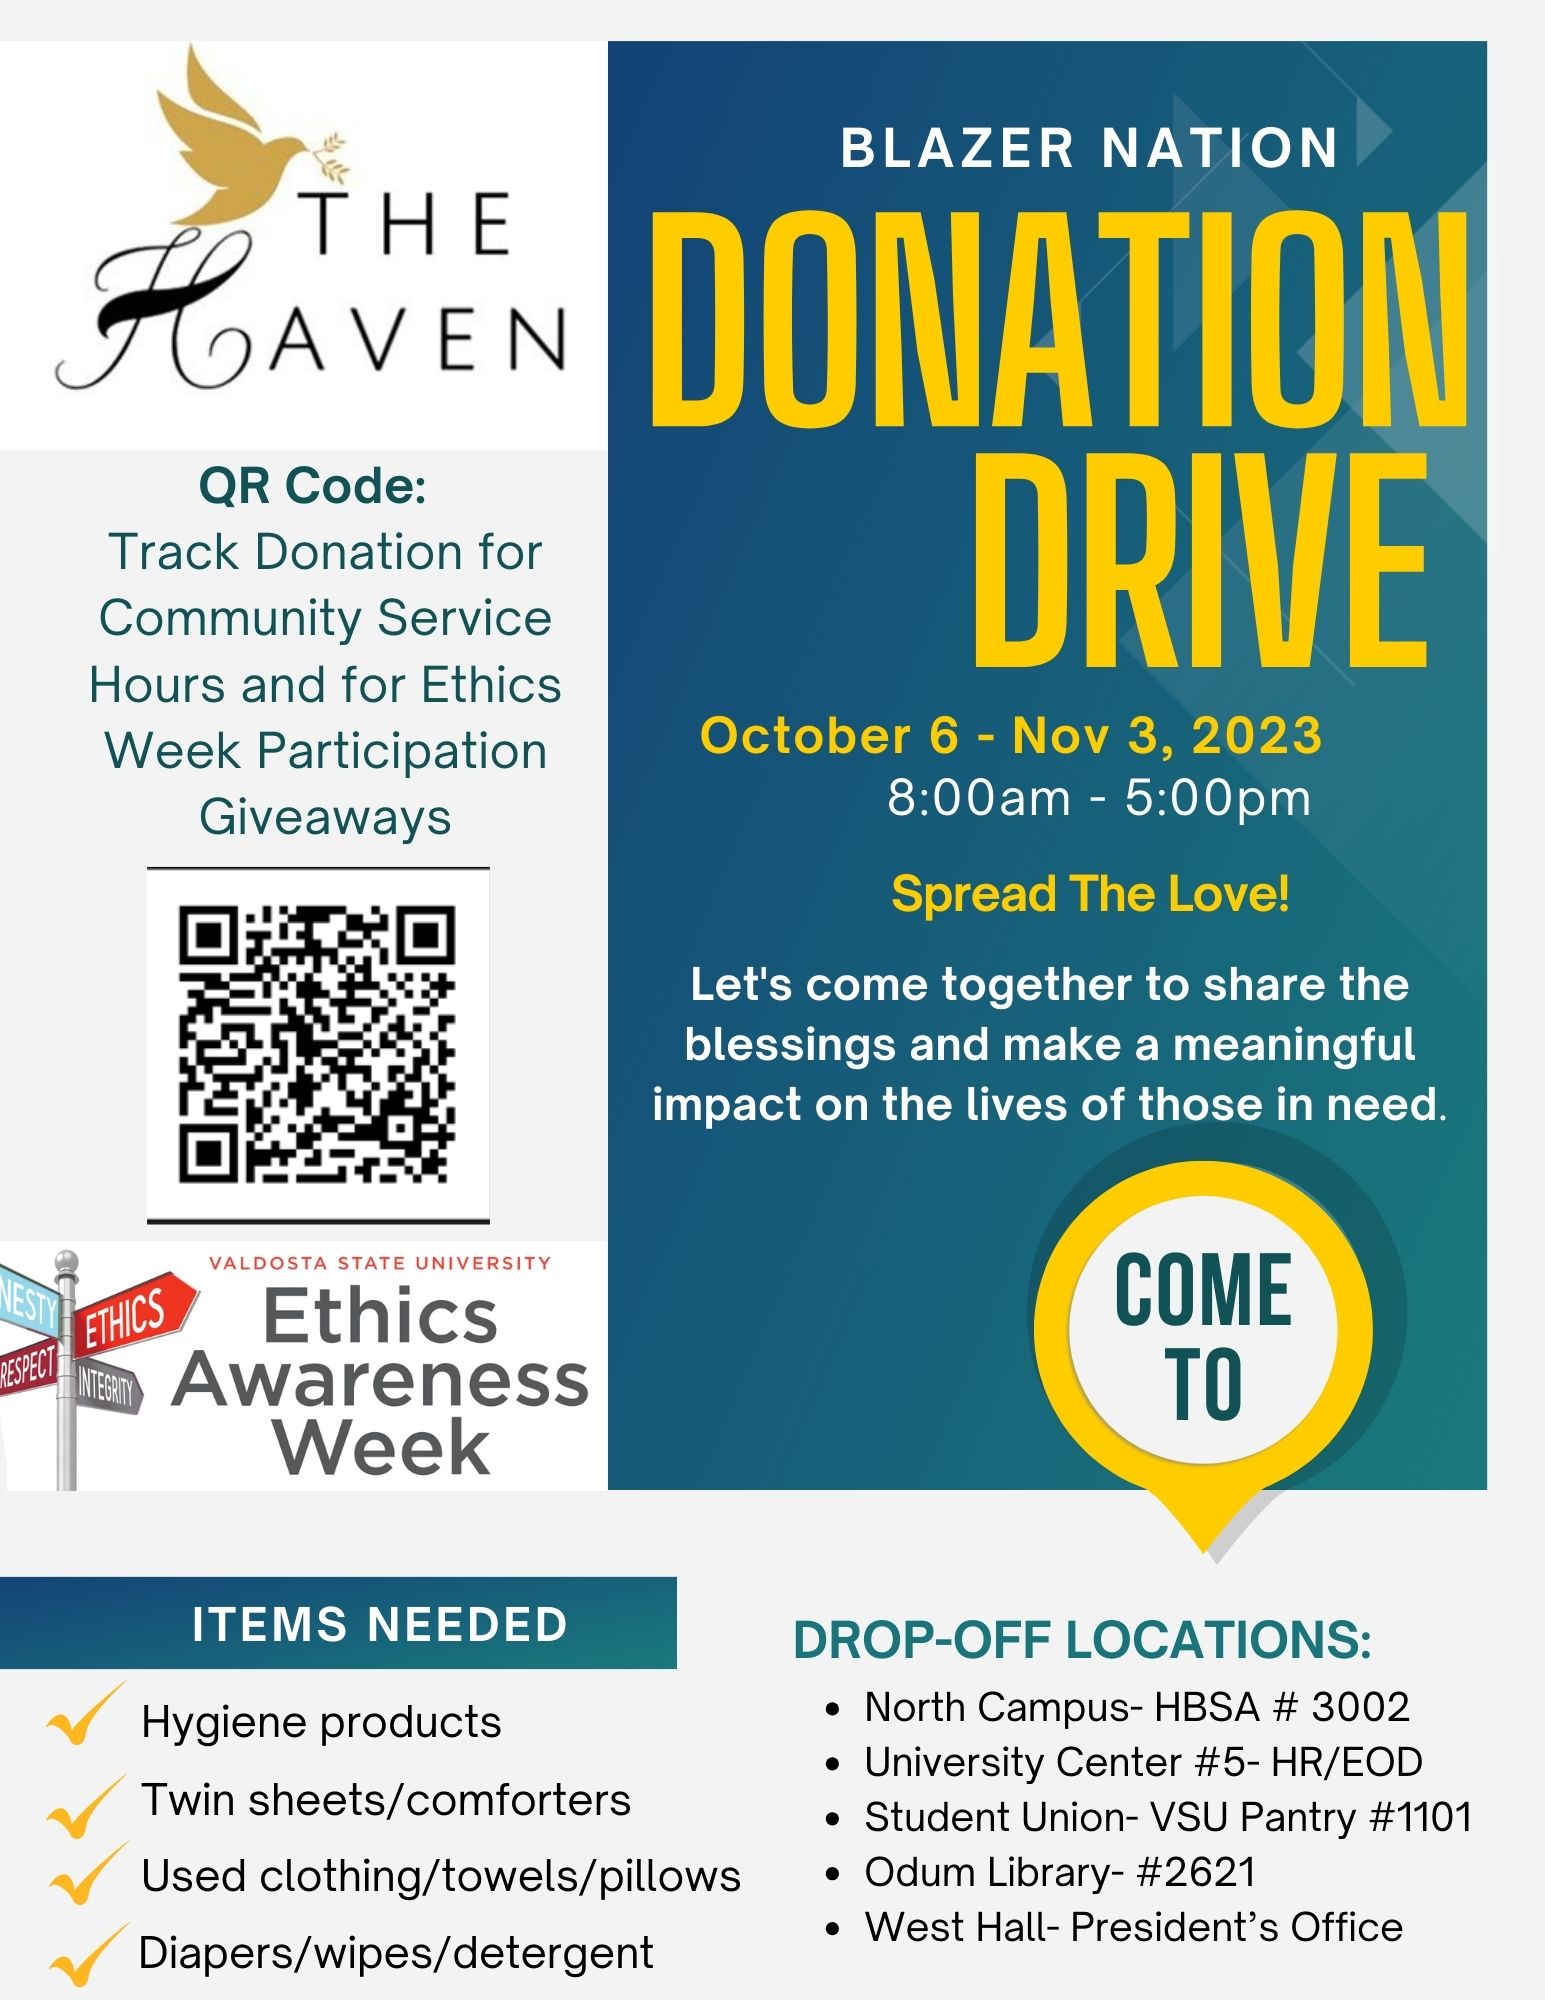 haven-donation-drive.jpg